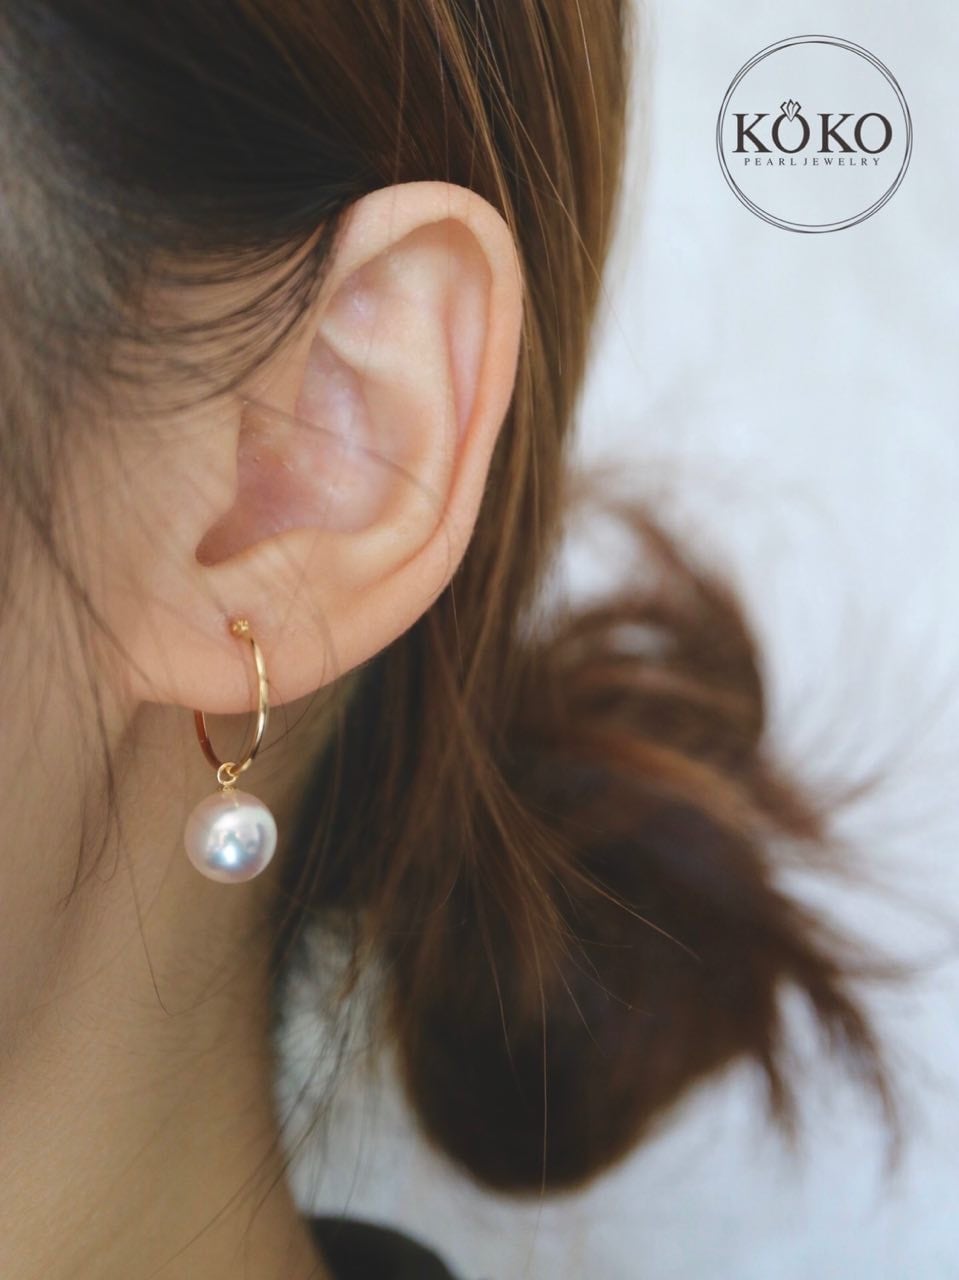 KOKO PEARL JEWELRY 8-8.5mm akoya pearl classic hoop earrings